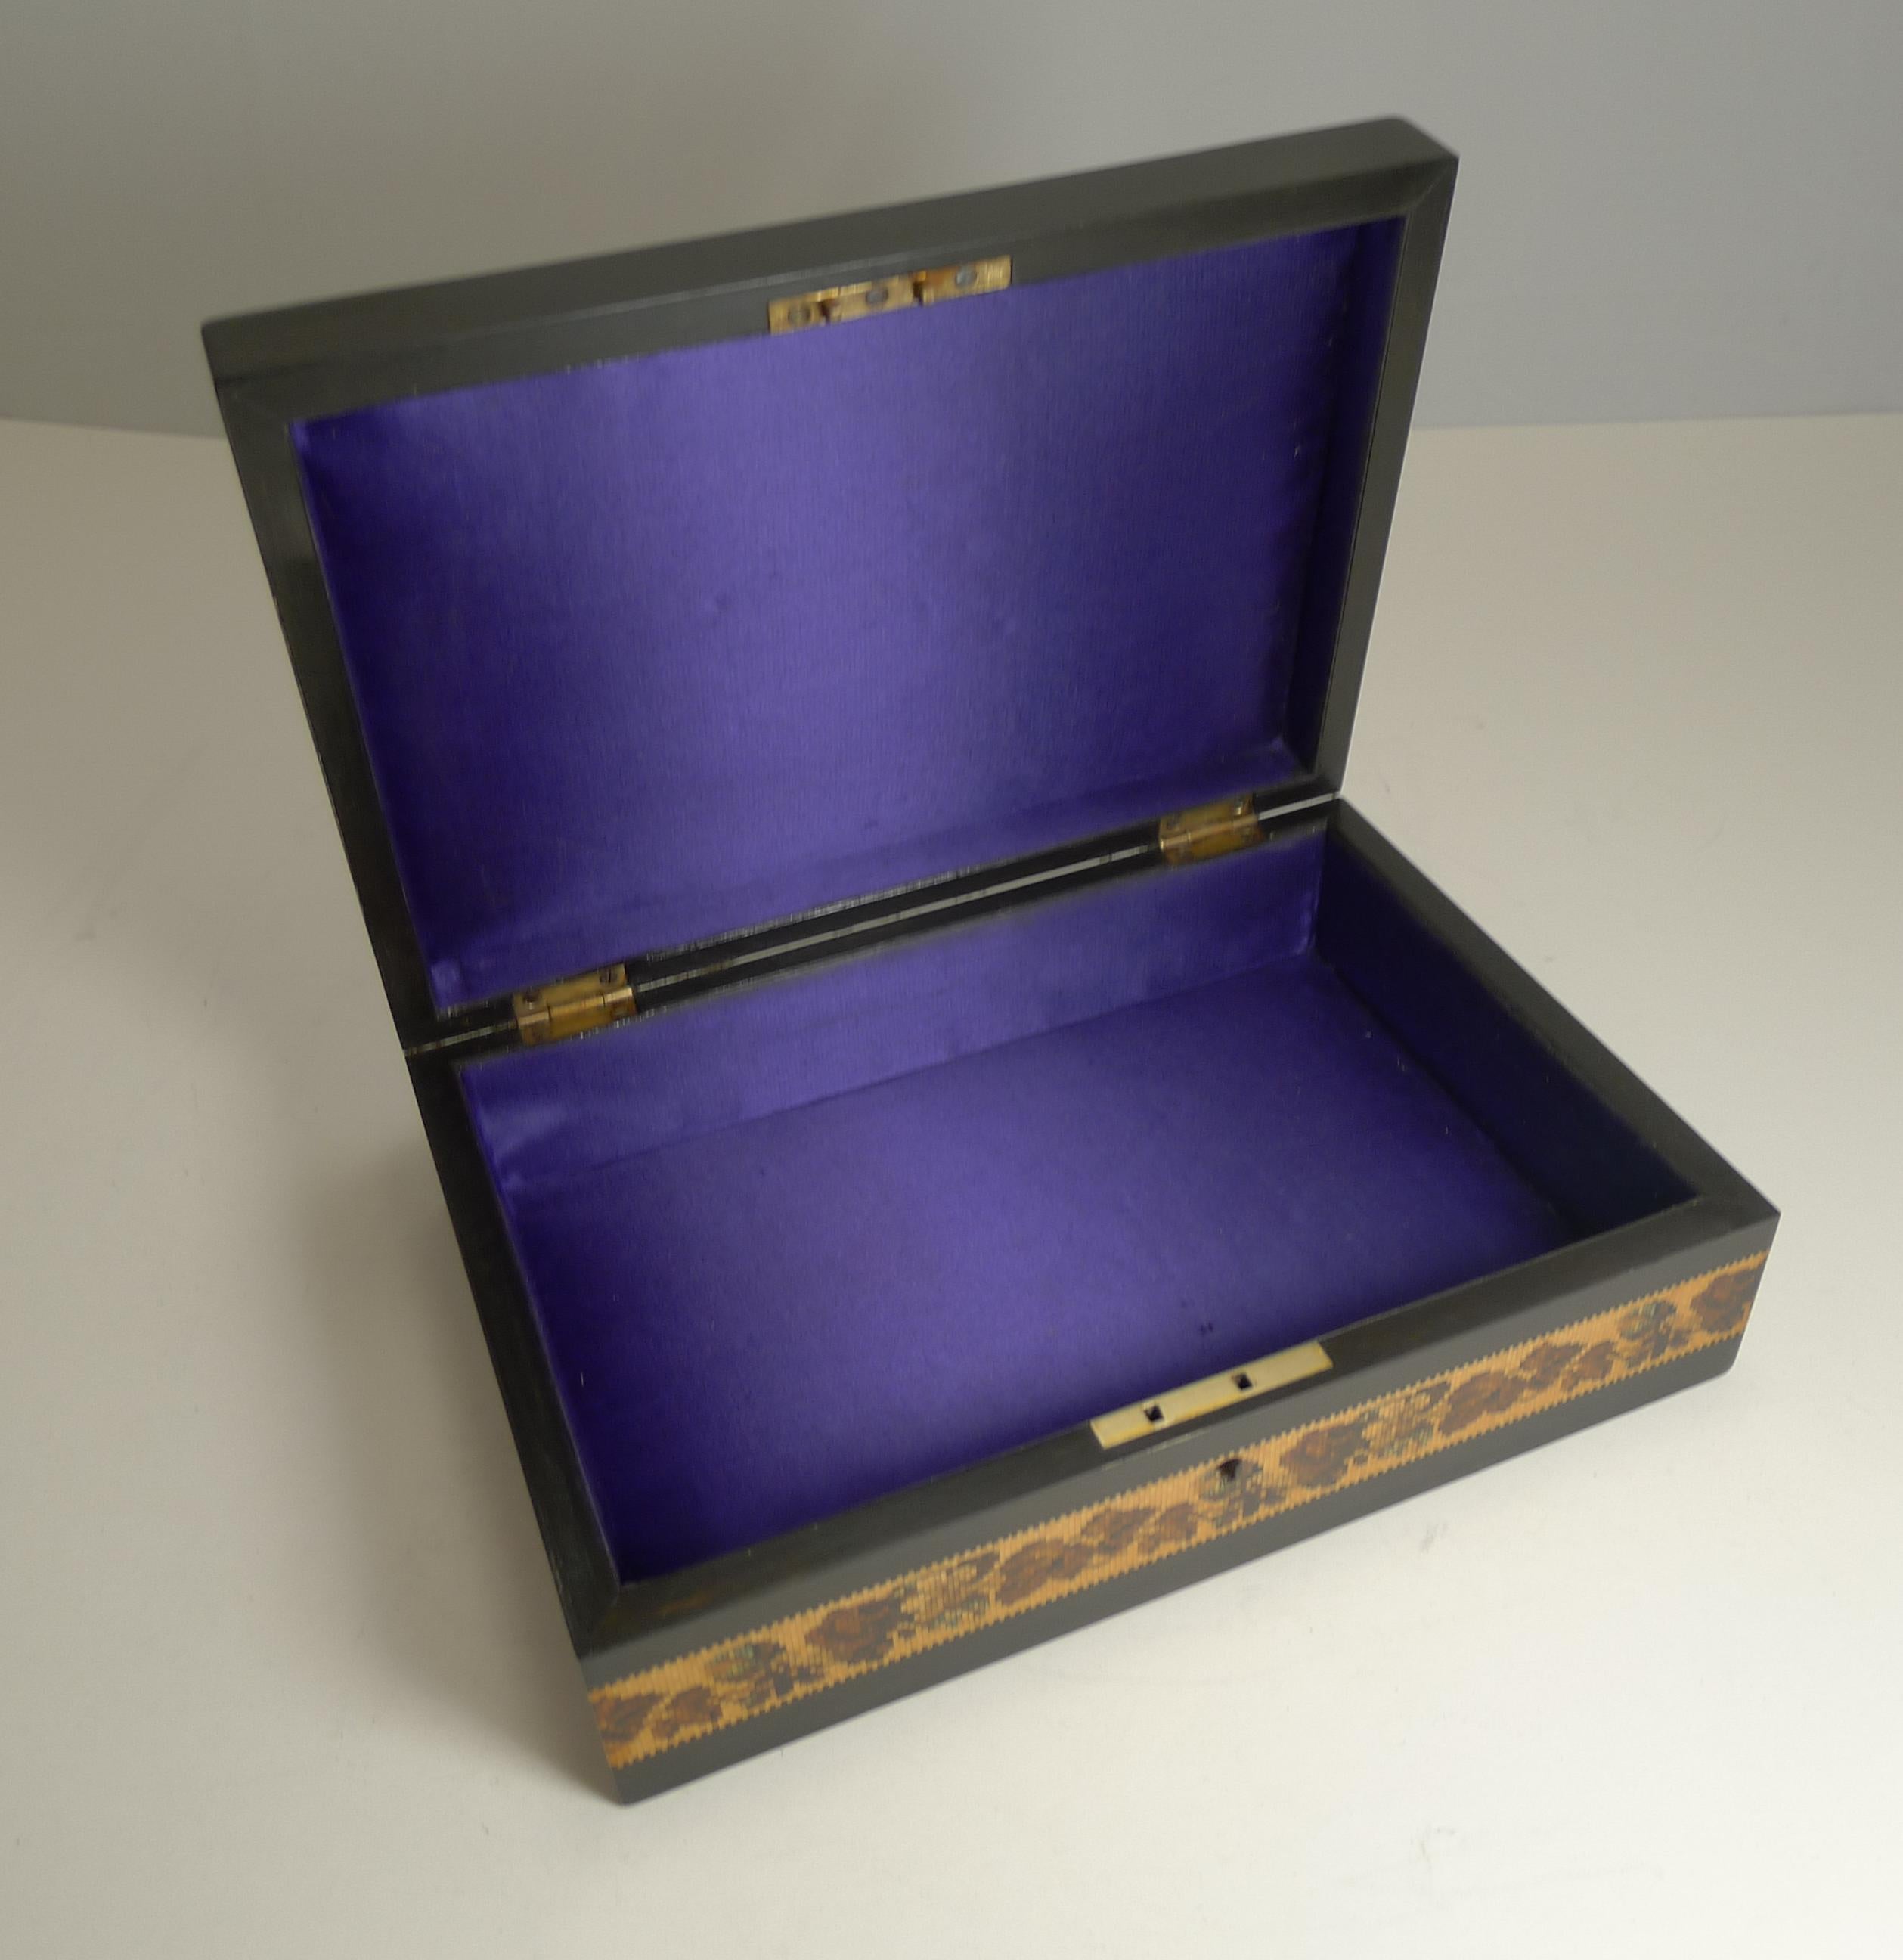 Wood Antique Tunbridge Ware Jewelry Box by T. Barton, Late Nye, circa 1850